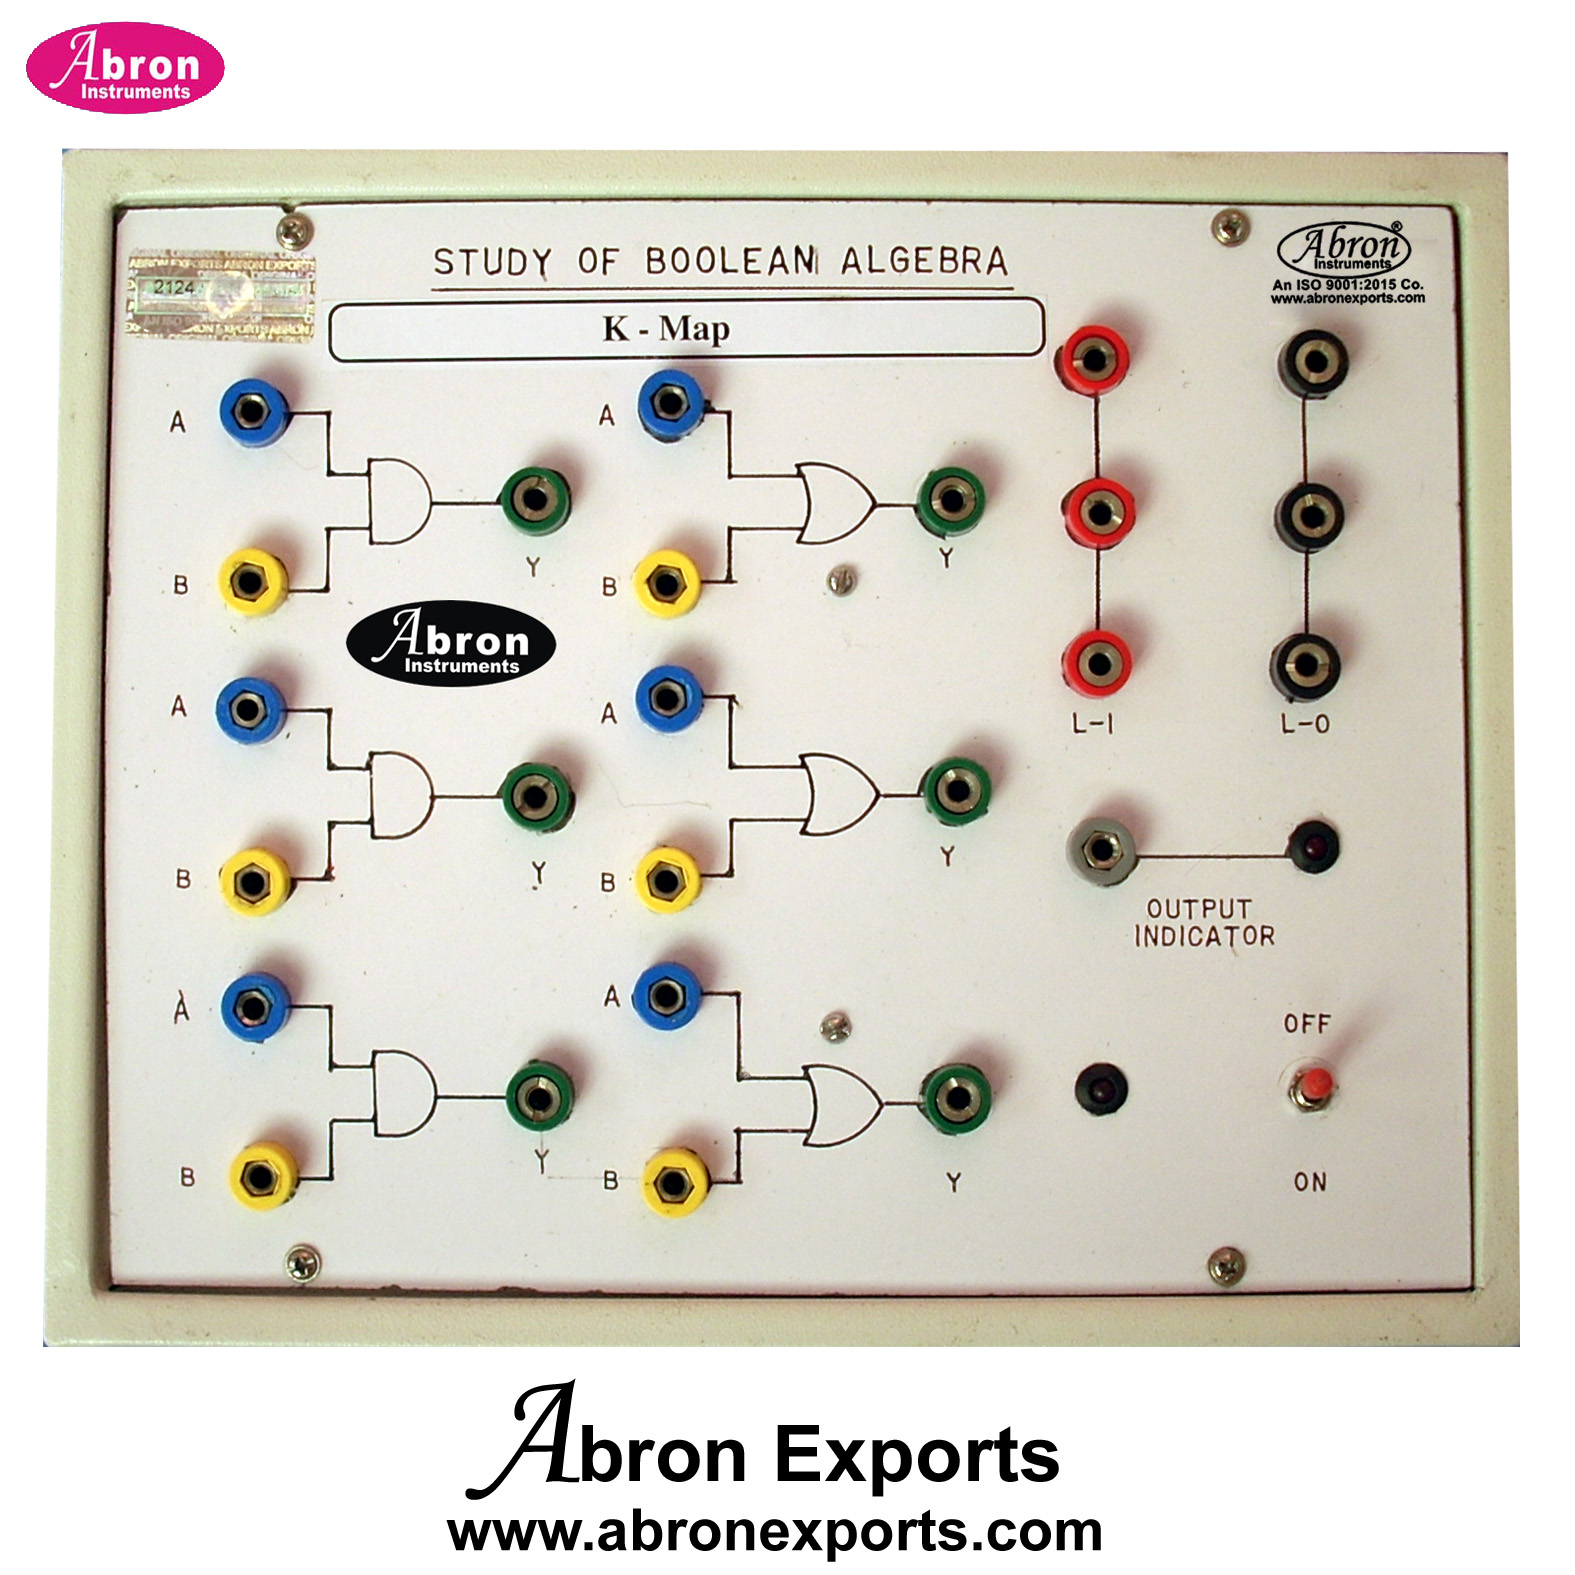 ETB Boolean K Map Algebra Expression Half Adder Digital Trainer Electronic Circuit Setup Sockets Power Supply Abron AE-1209K 